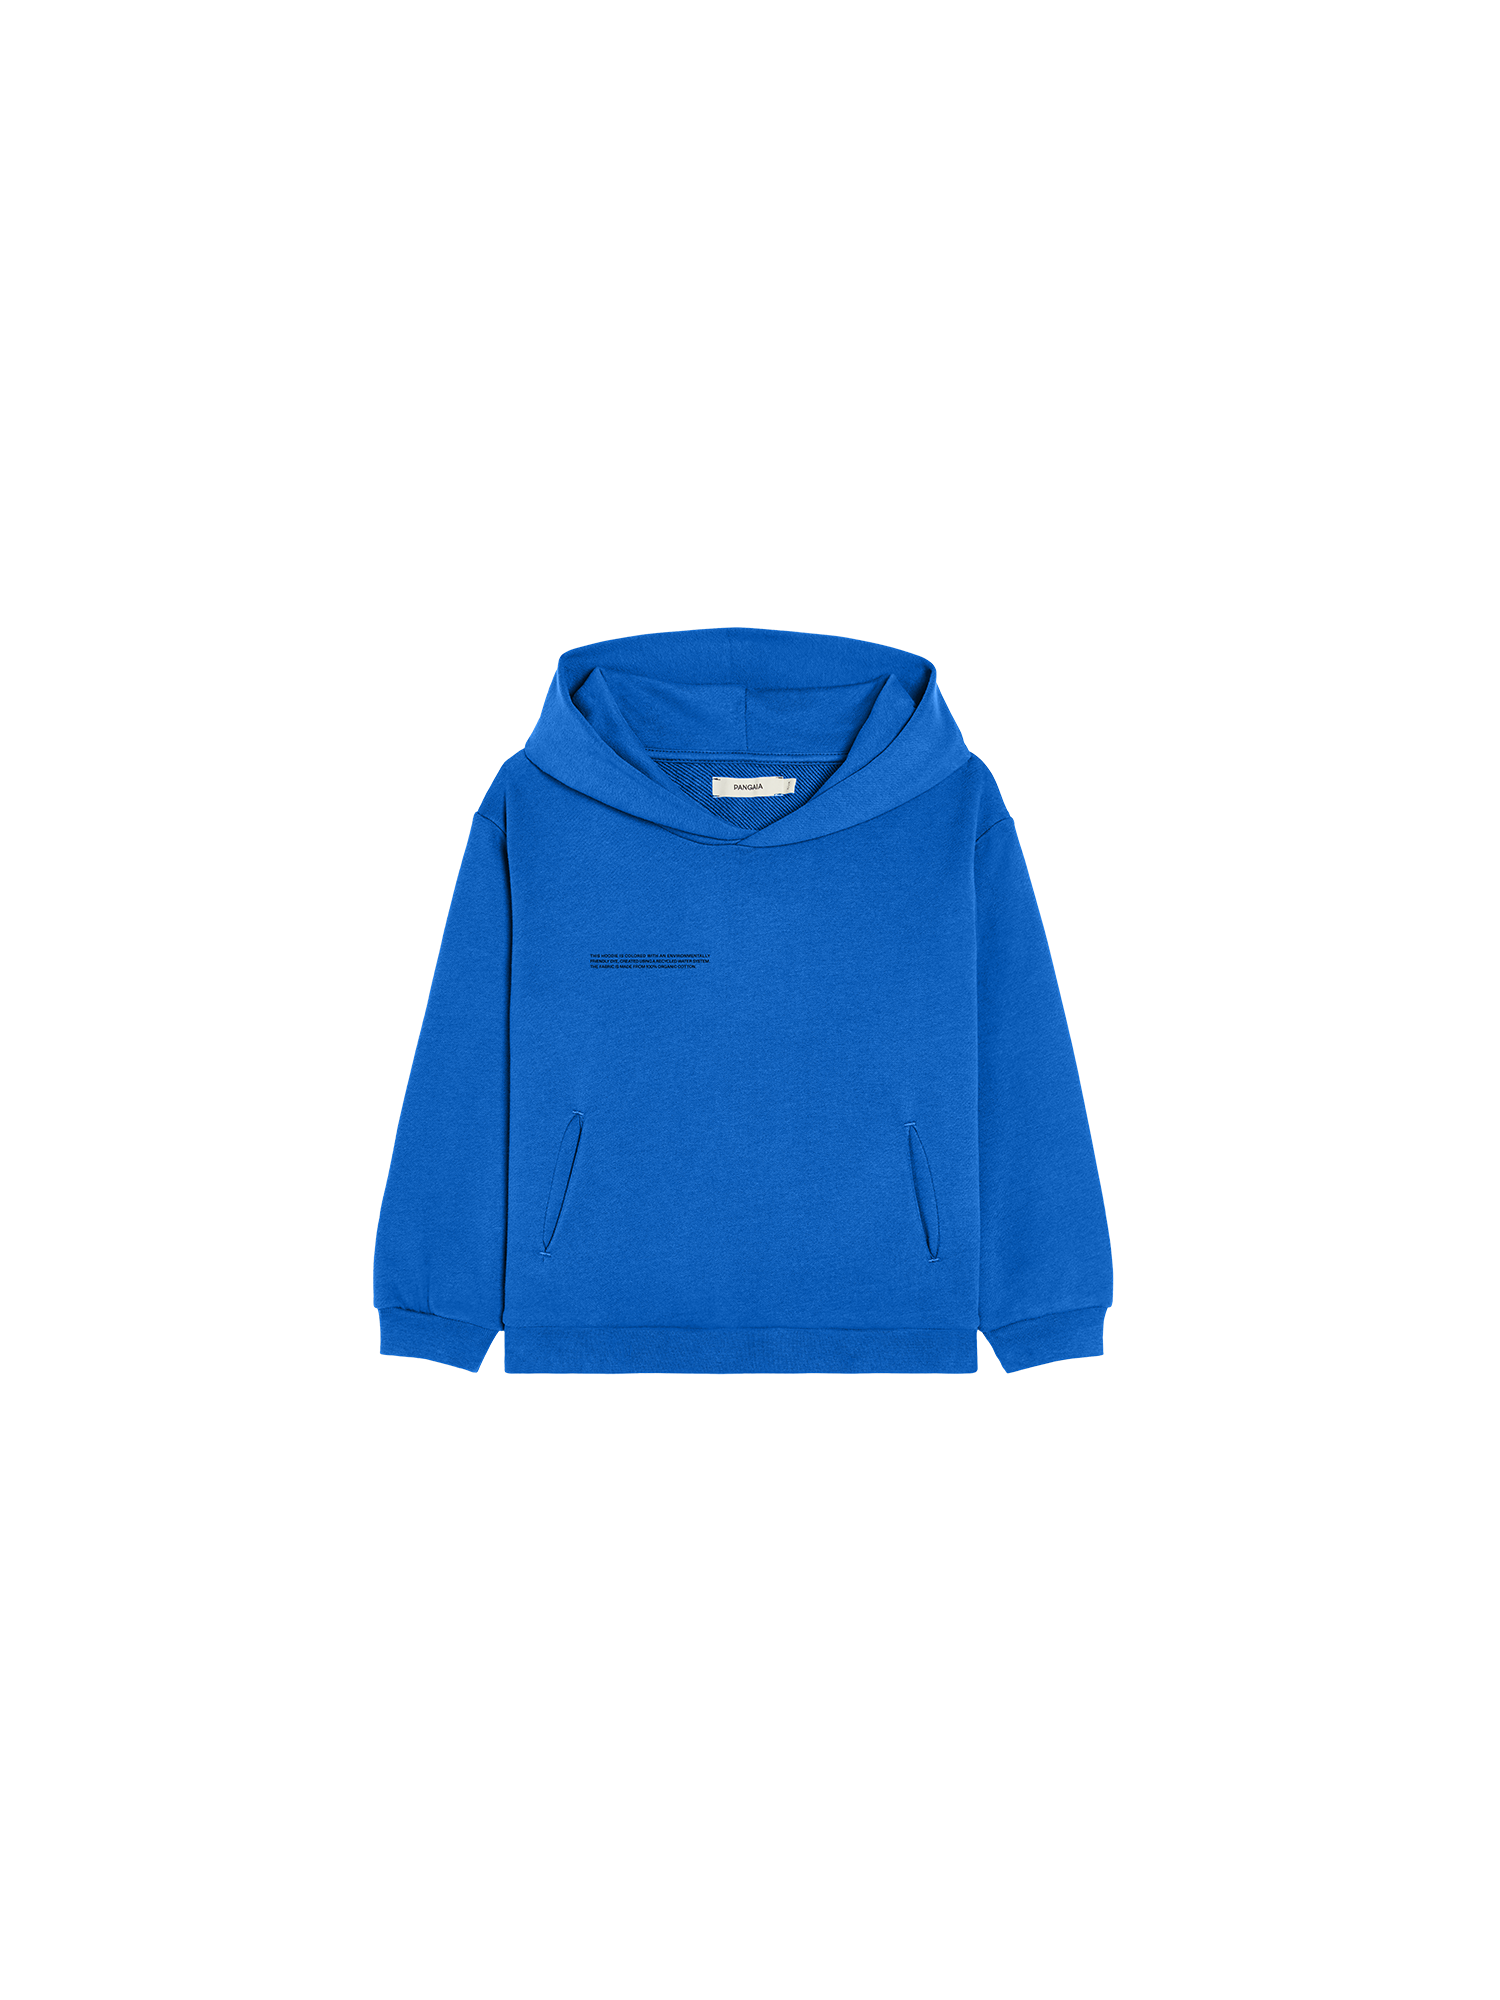 365 Midweight Sweatshirt—cobalt blue